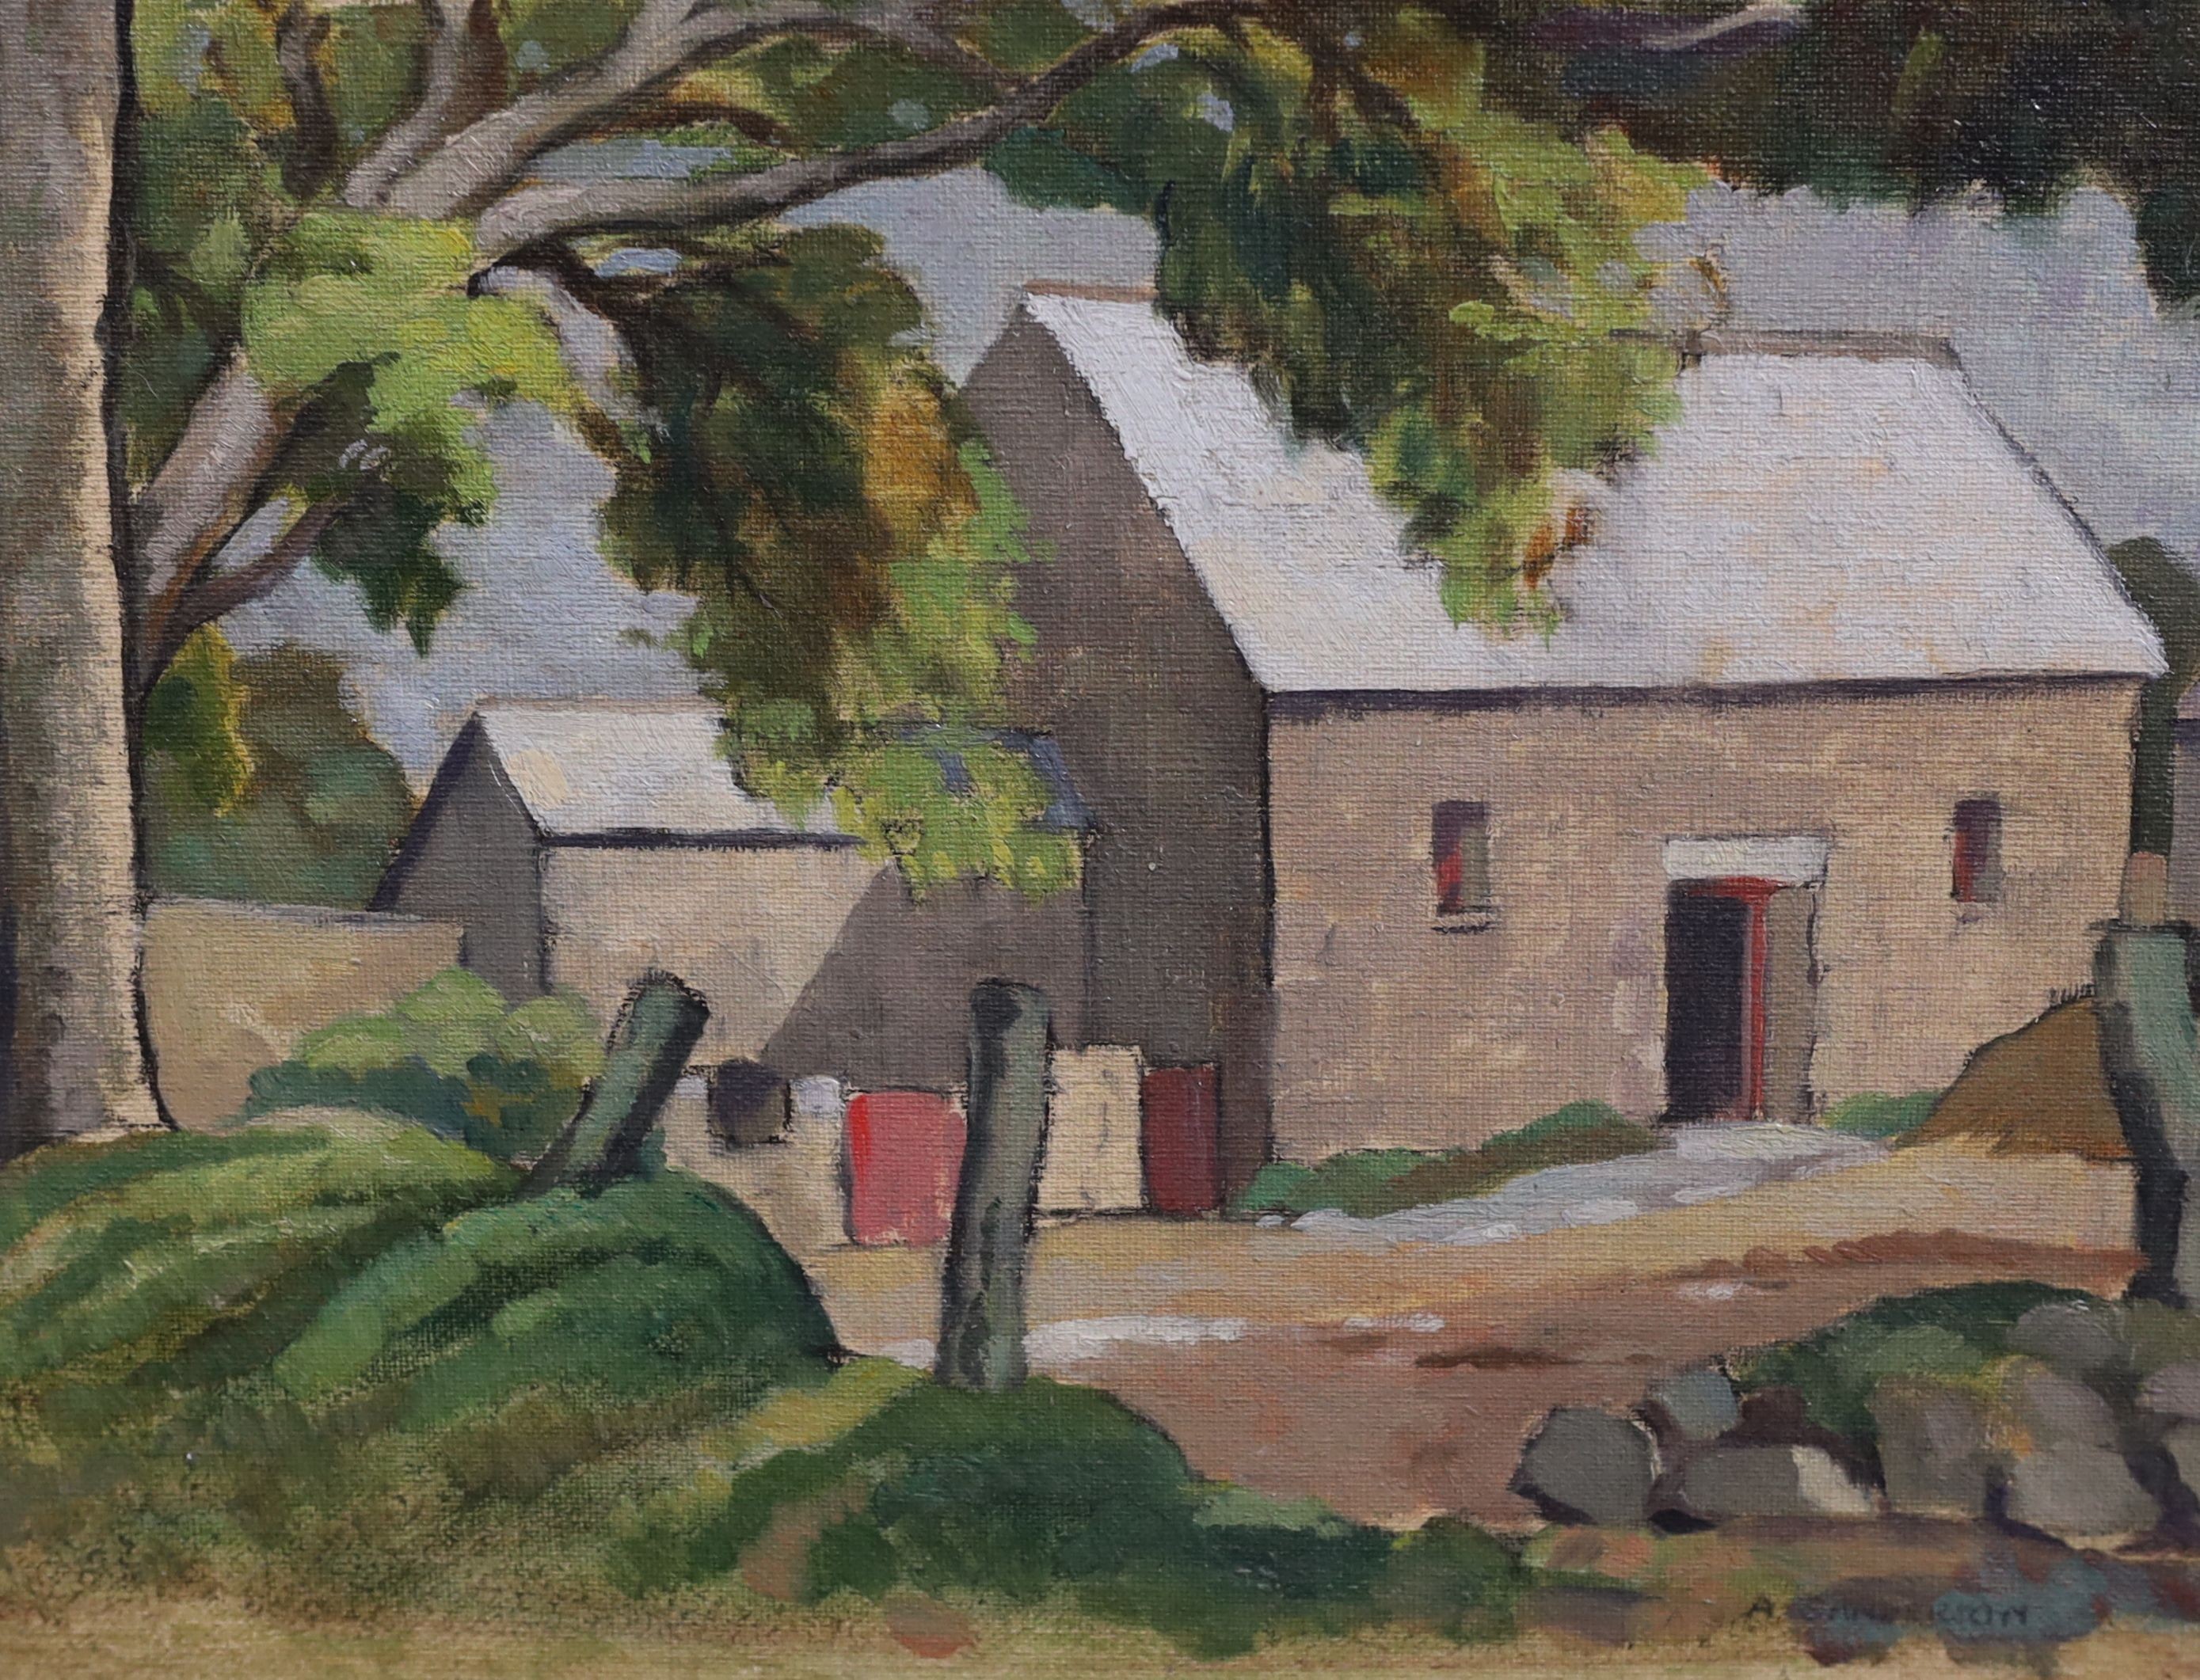 Archibald Sanderson (1900-1971), Farm Buildings, Dyfed and Pembrokeshire, pair of oils on canvas board, 29 x 39cm